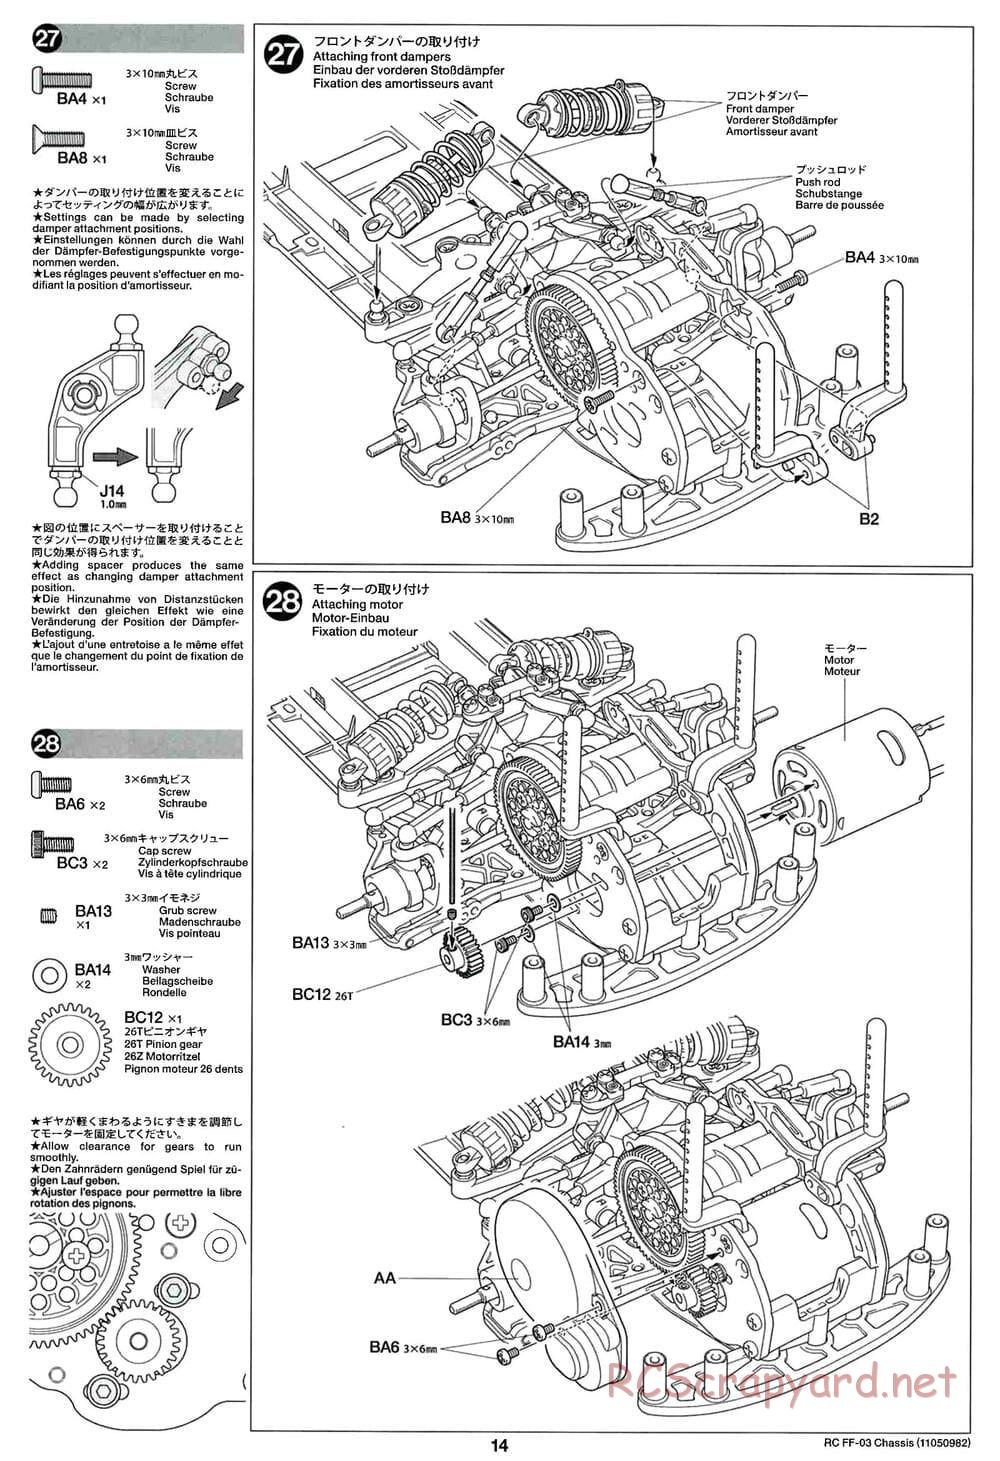 Tamiya - FF-03 Chassis - Manual - Page 14